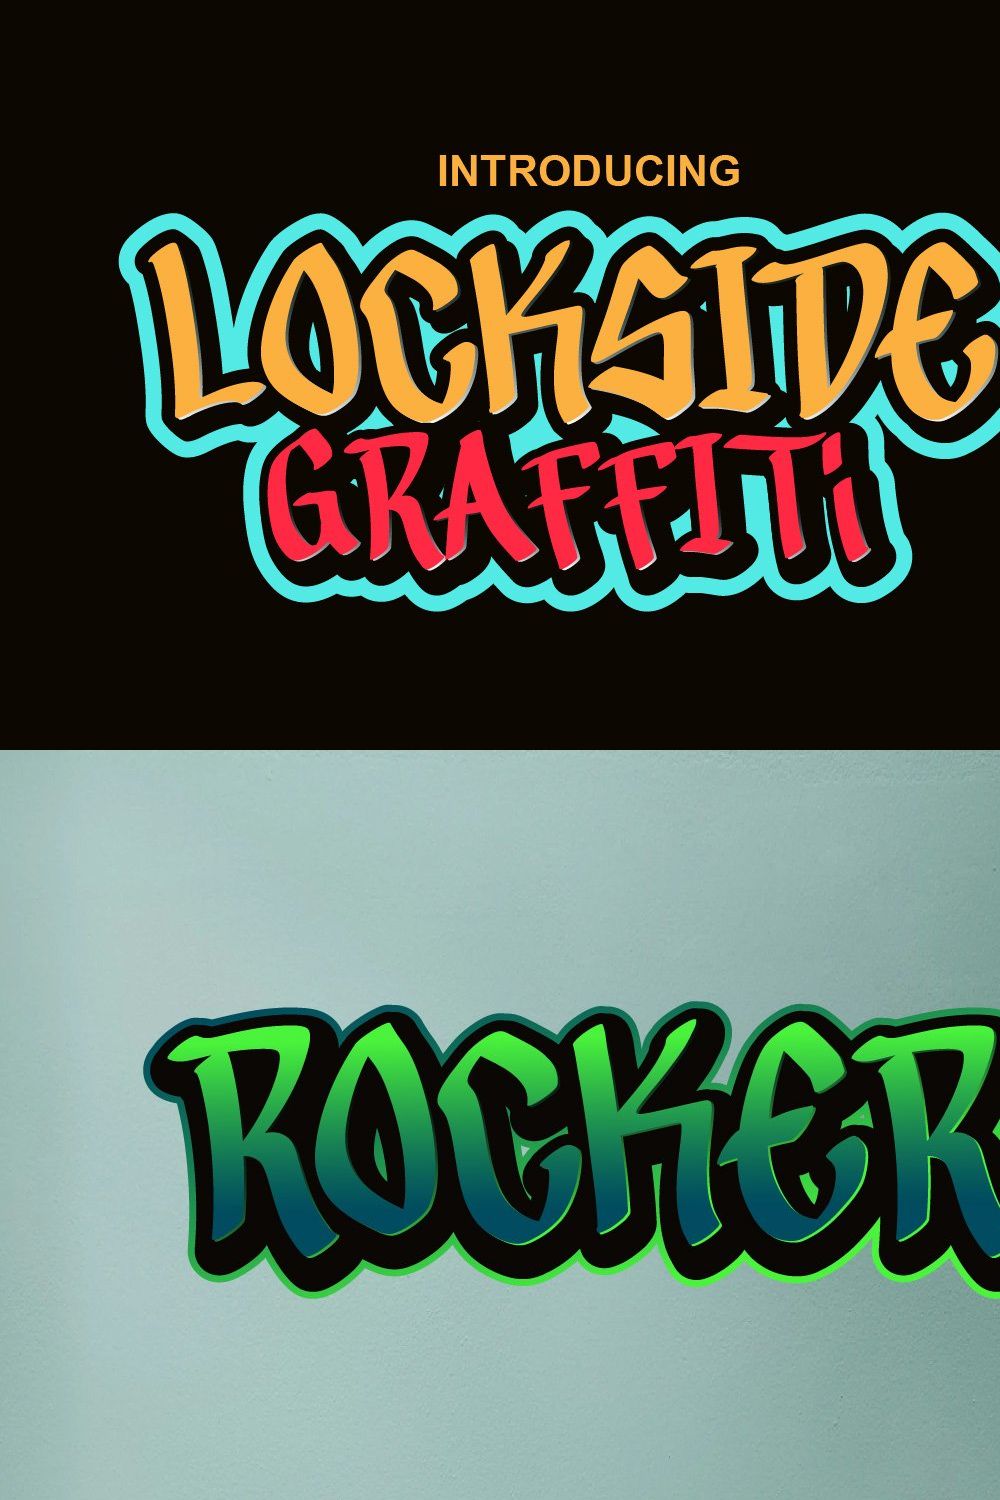 Lockside Graffiti Display Font pinterest preview image.